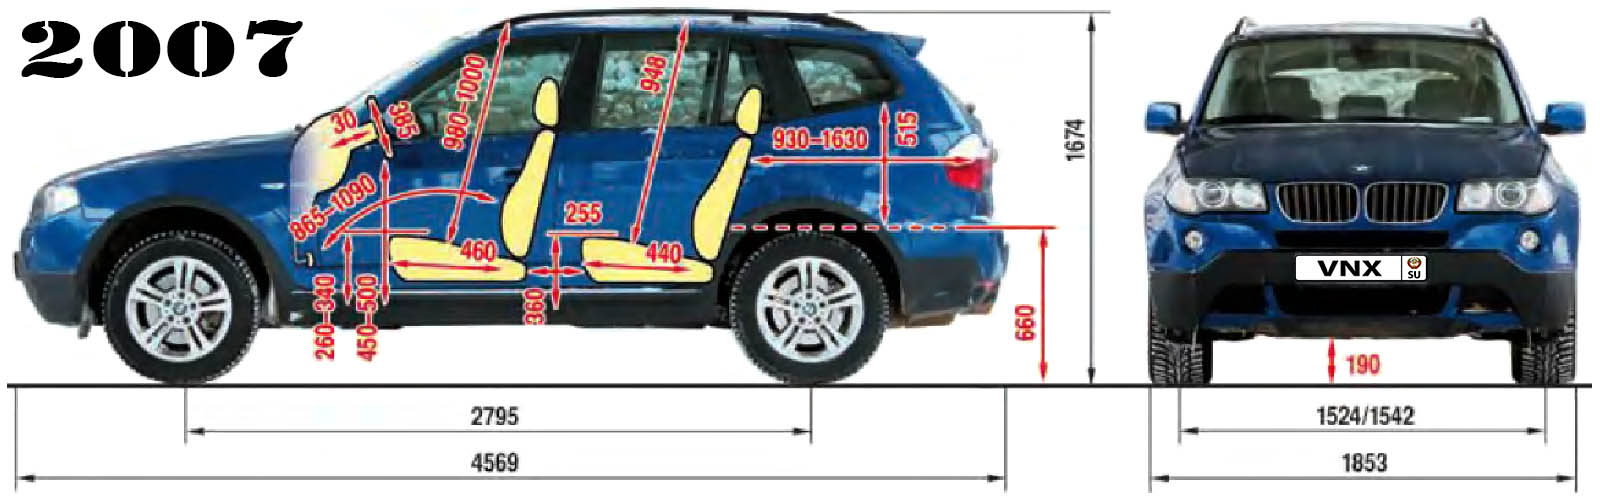 Габаритные размеры БМВ Икс 3 2007 (dimensions BMW X3 E83)